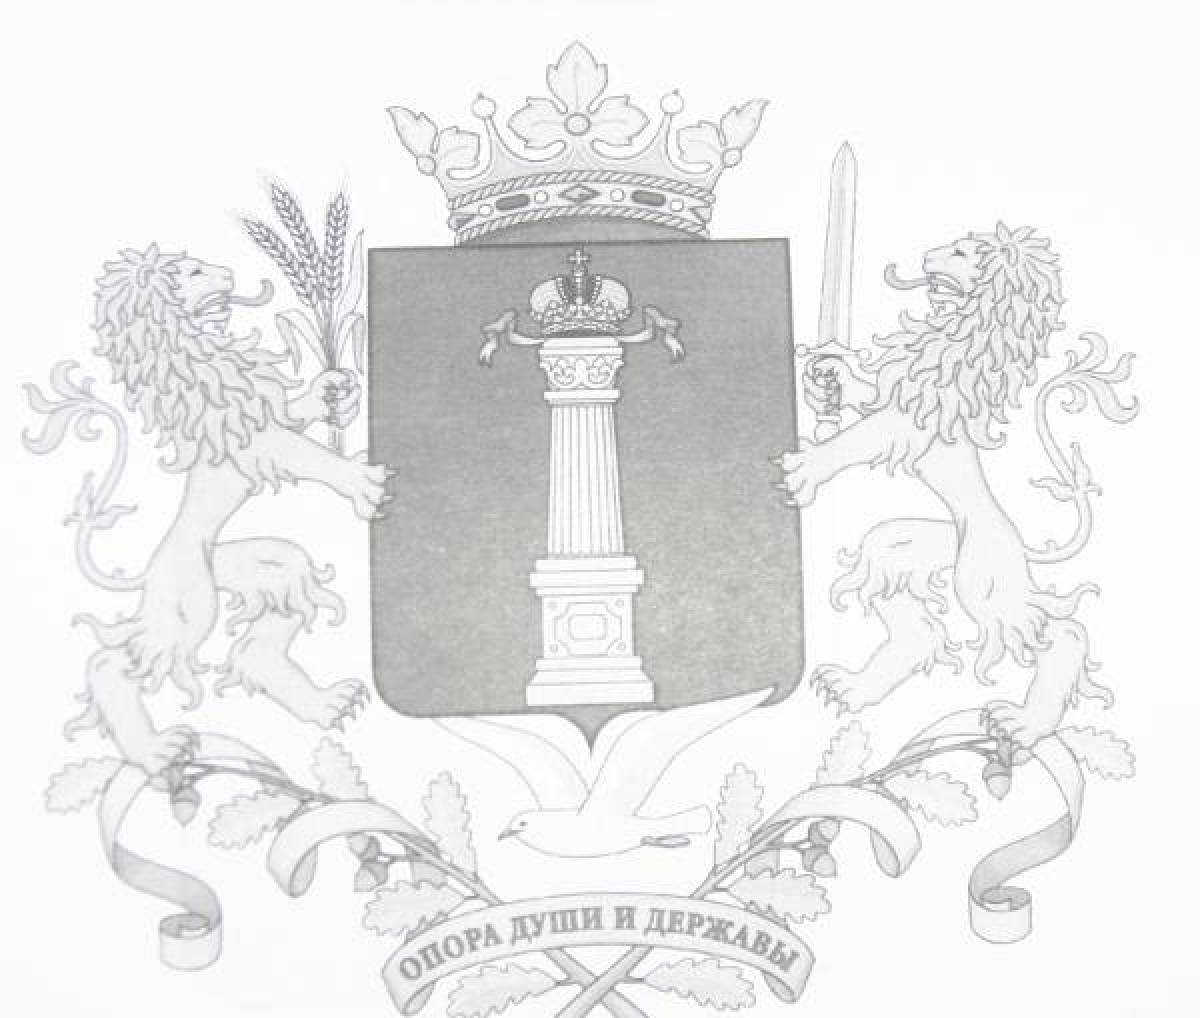 Coat of arms of glorious Ulyanovsk region